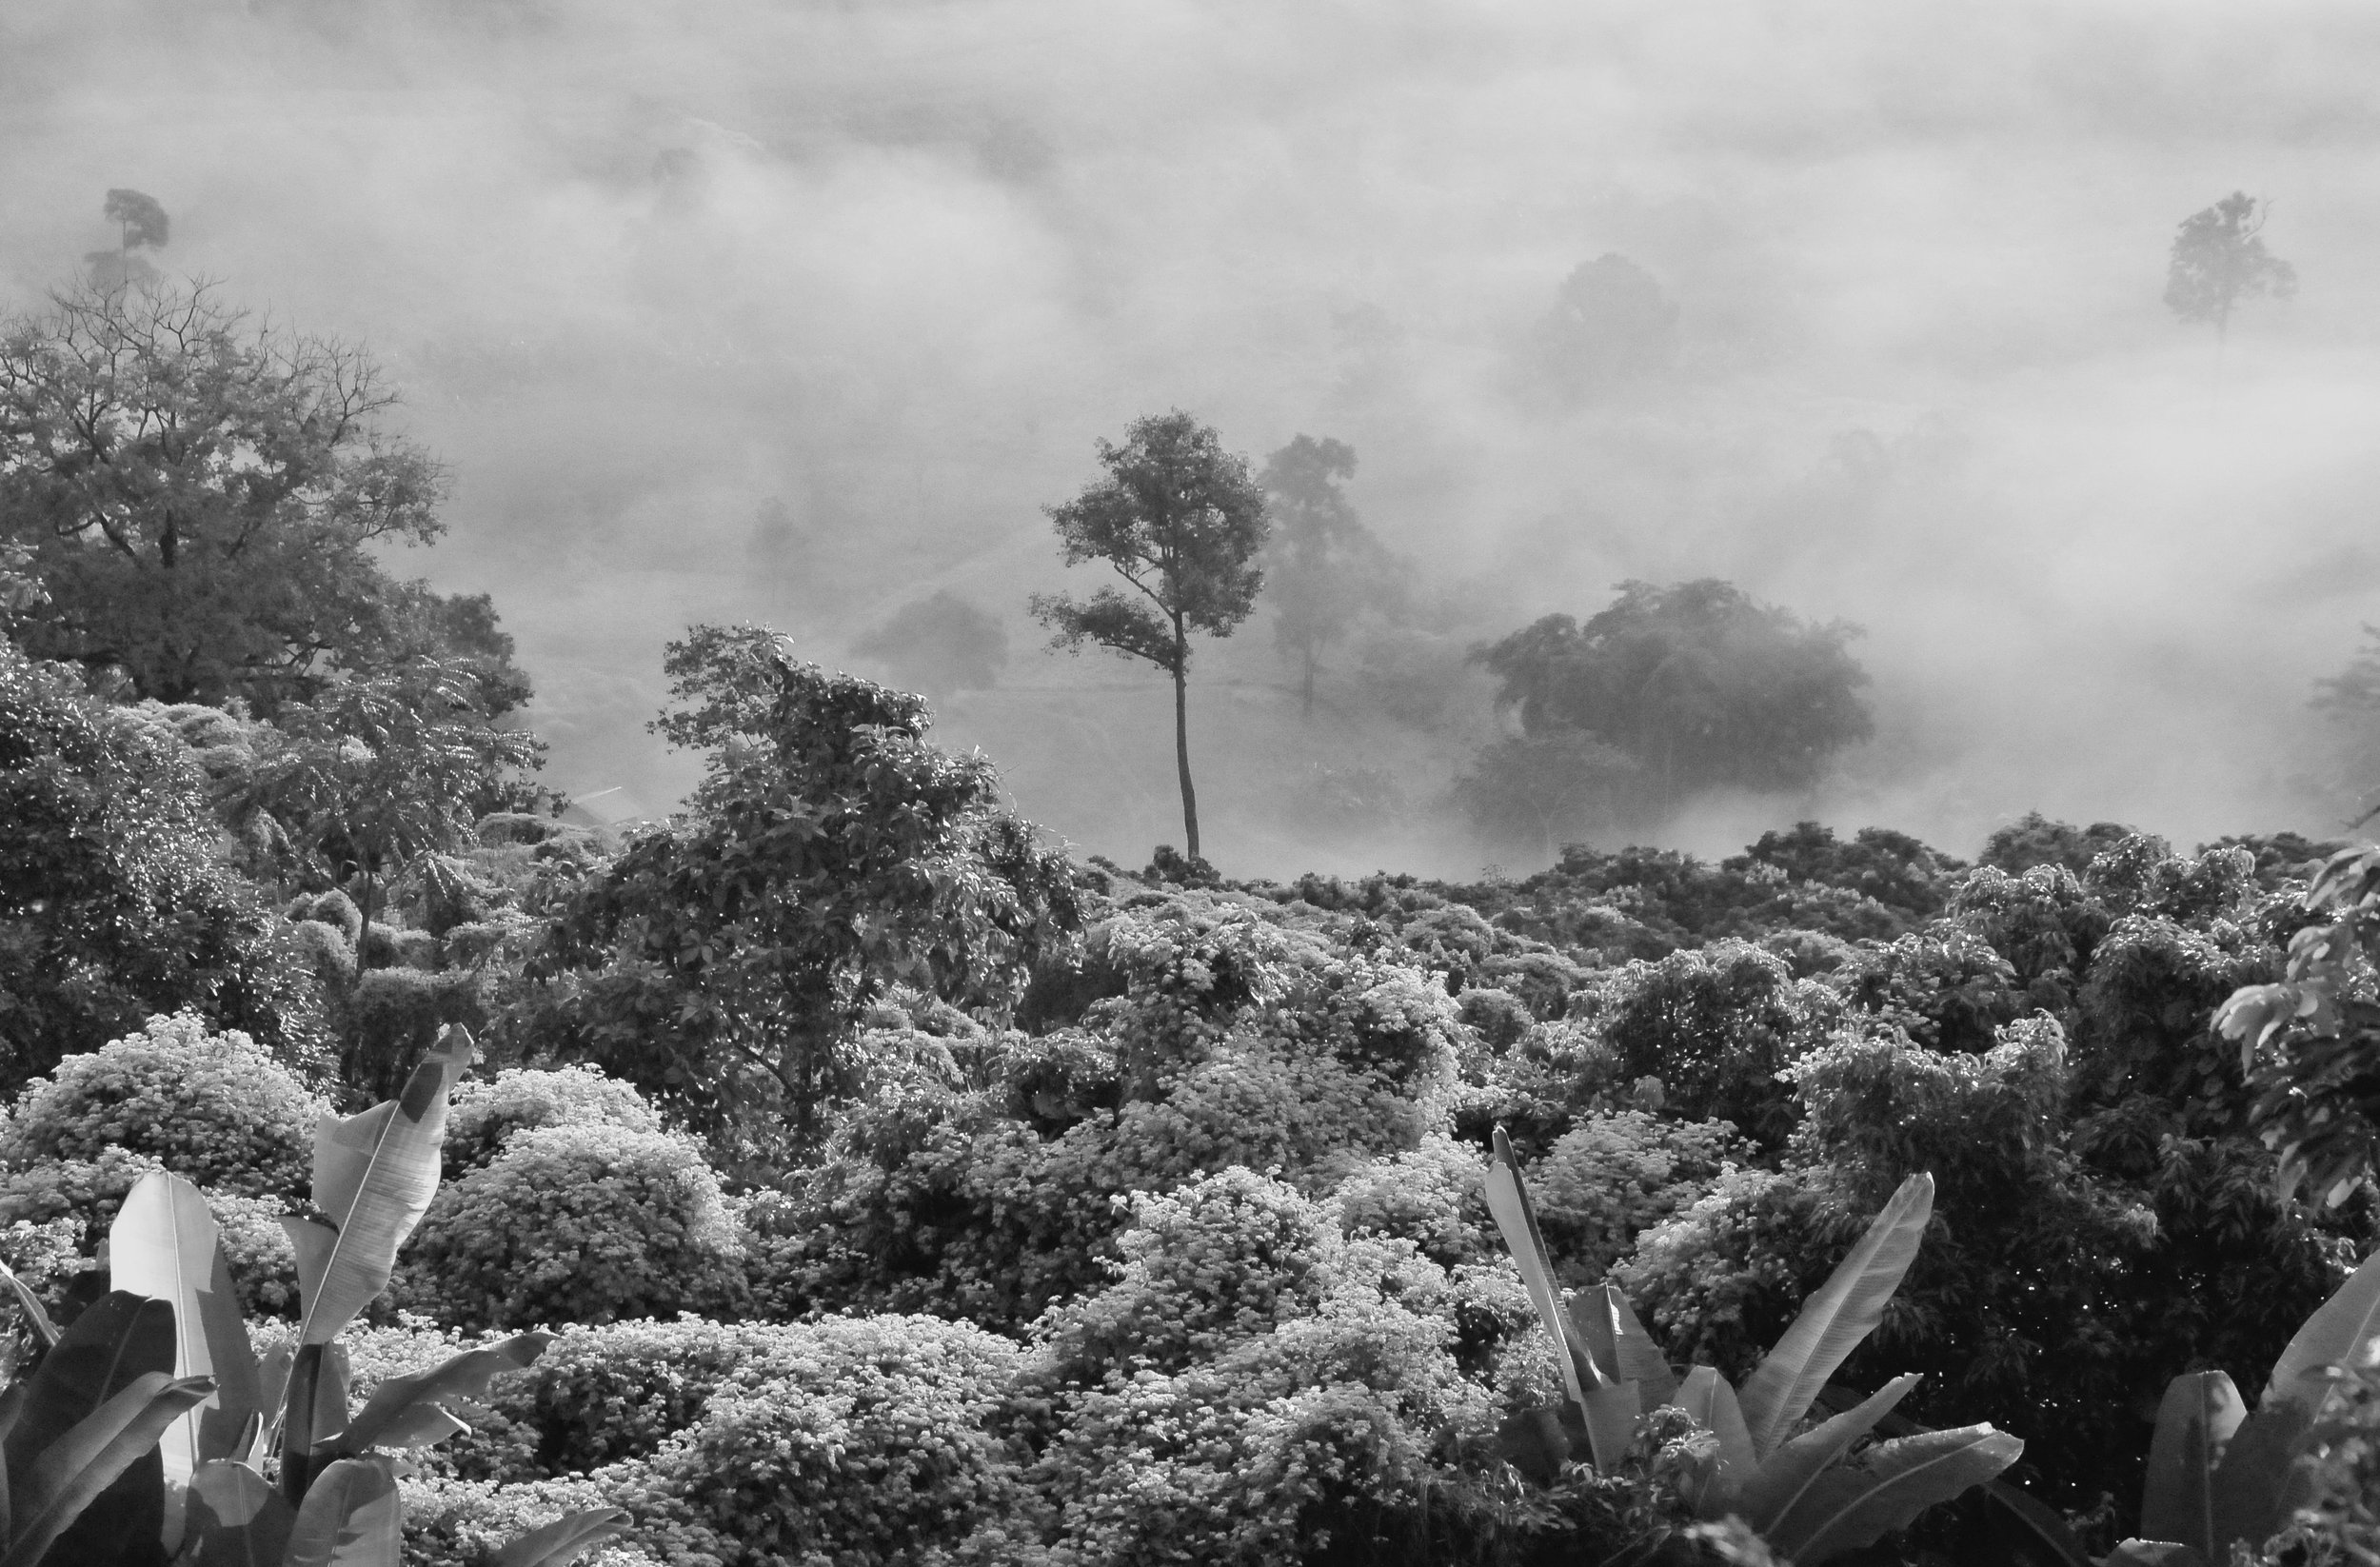 A rainforest shrouded in mist